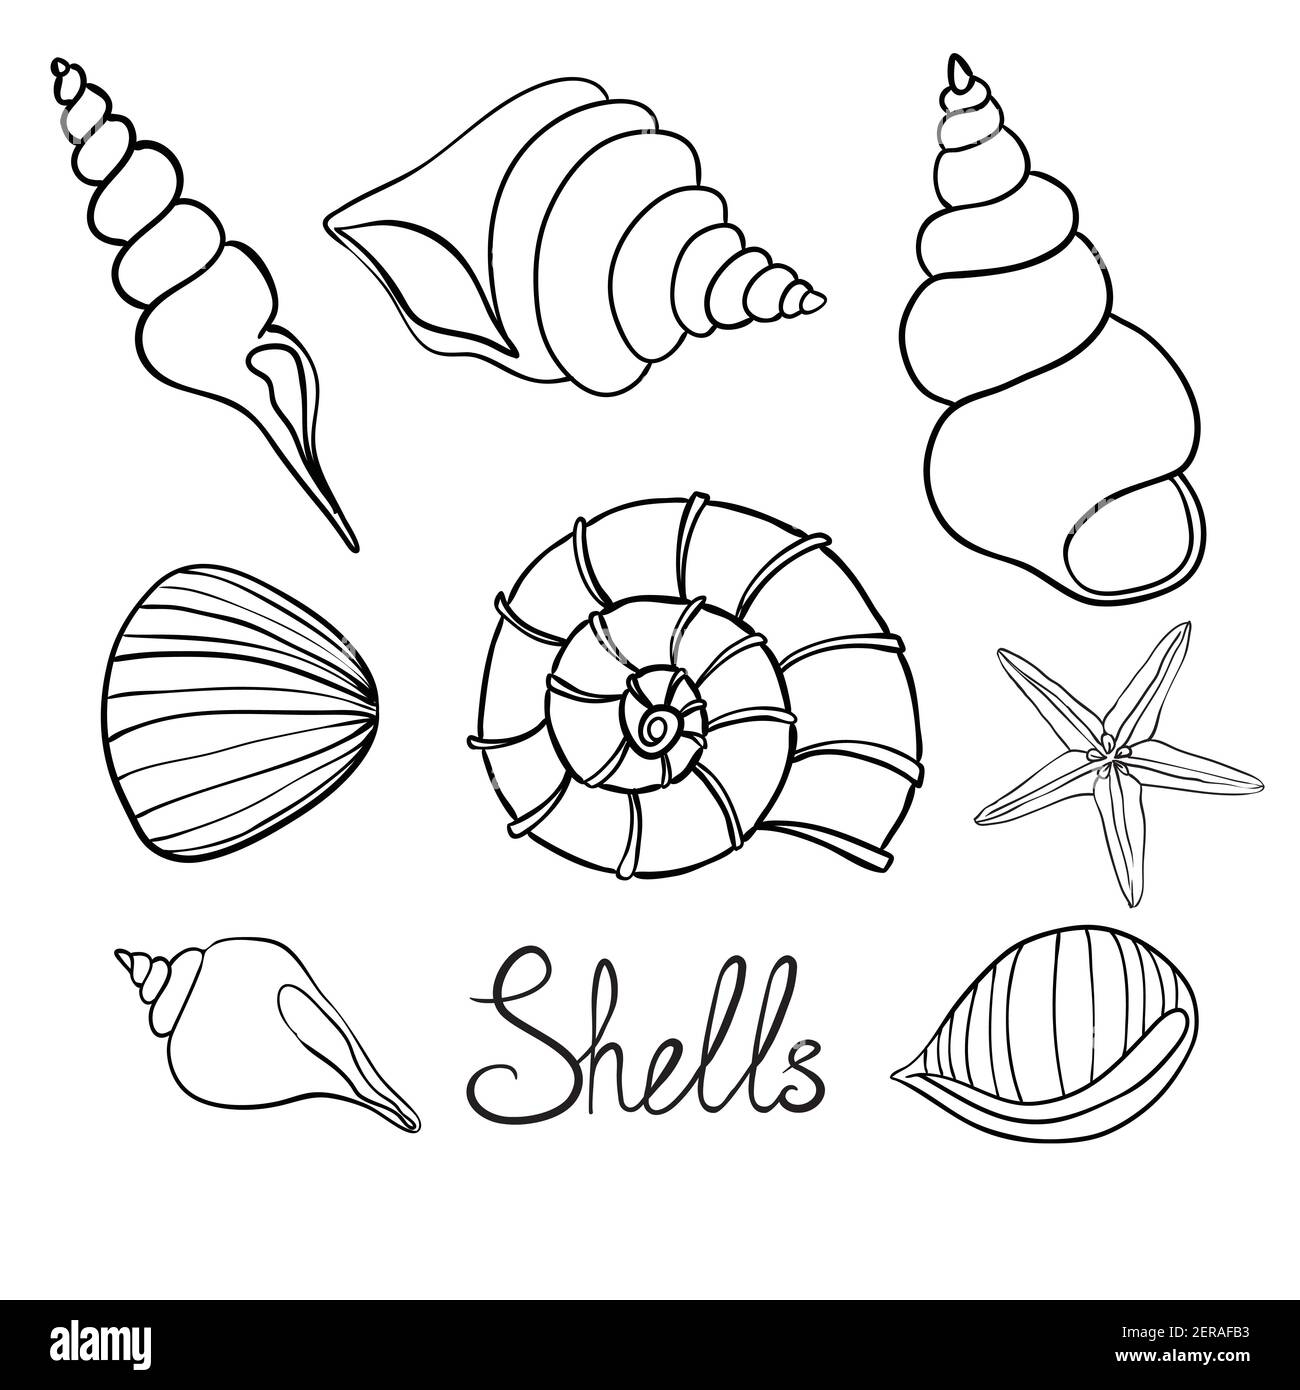 Hand drawn vector illustrations - collection of seashells. Marine set. Stock Vector